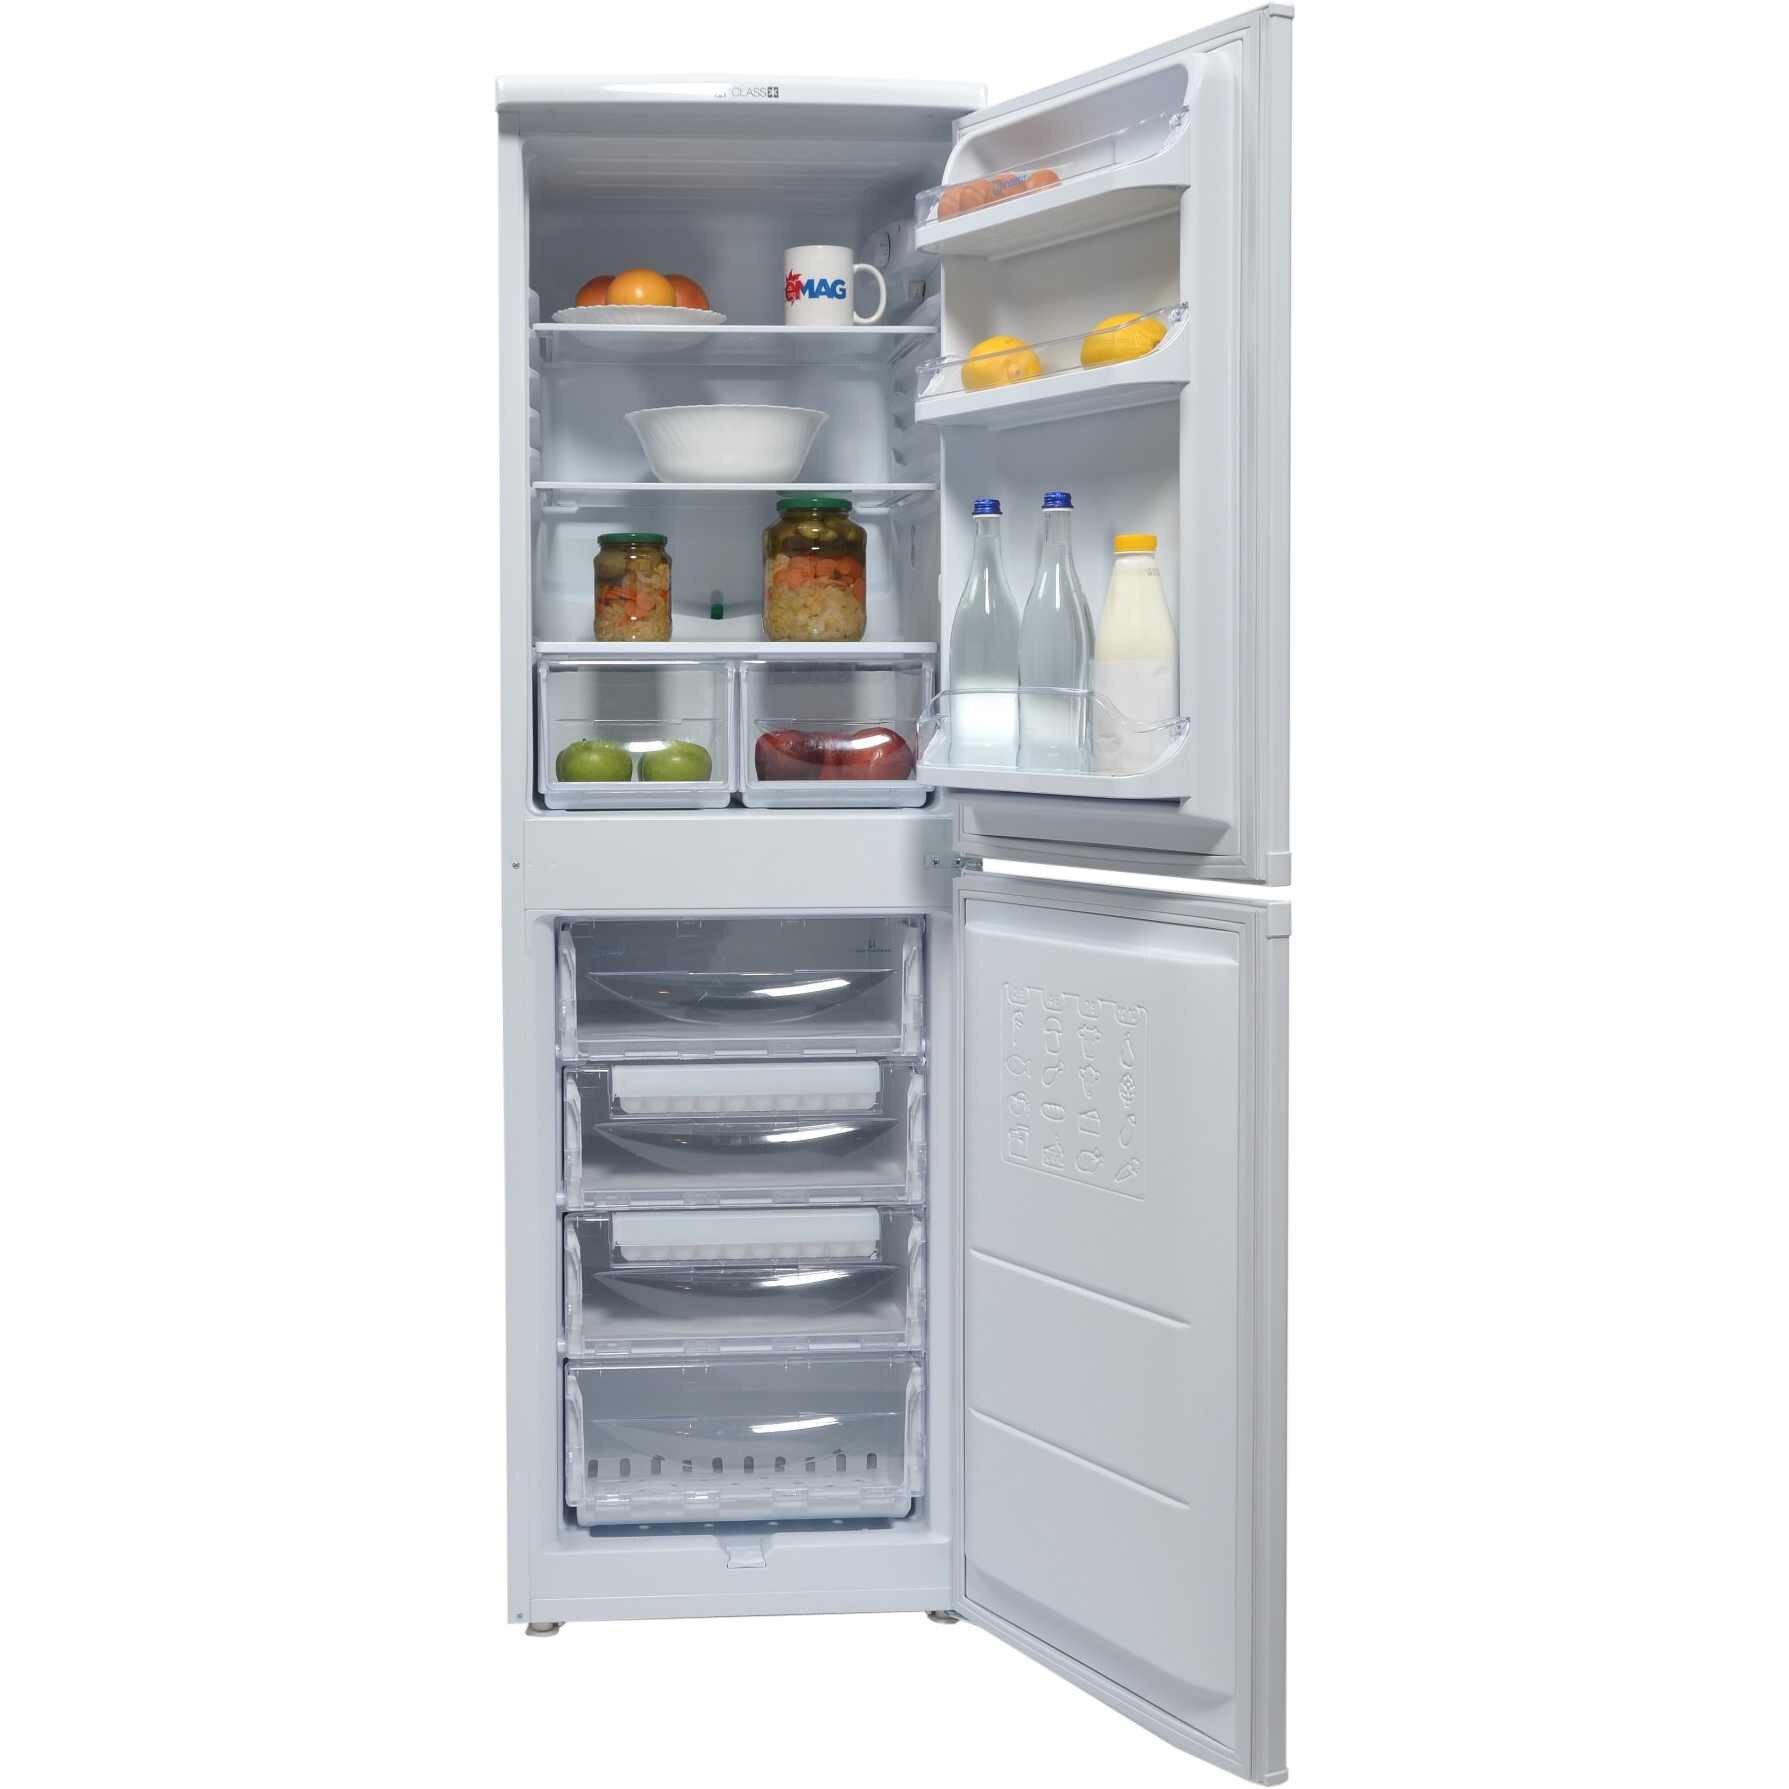 Хладилник Indesit CAA 55 с обем от 234 л.